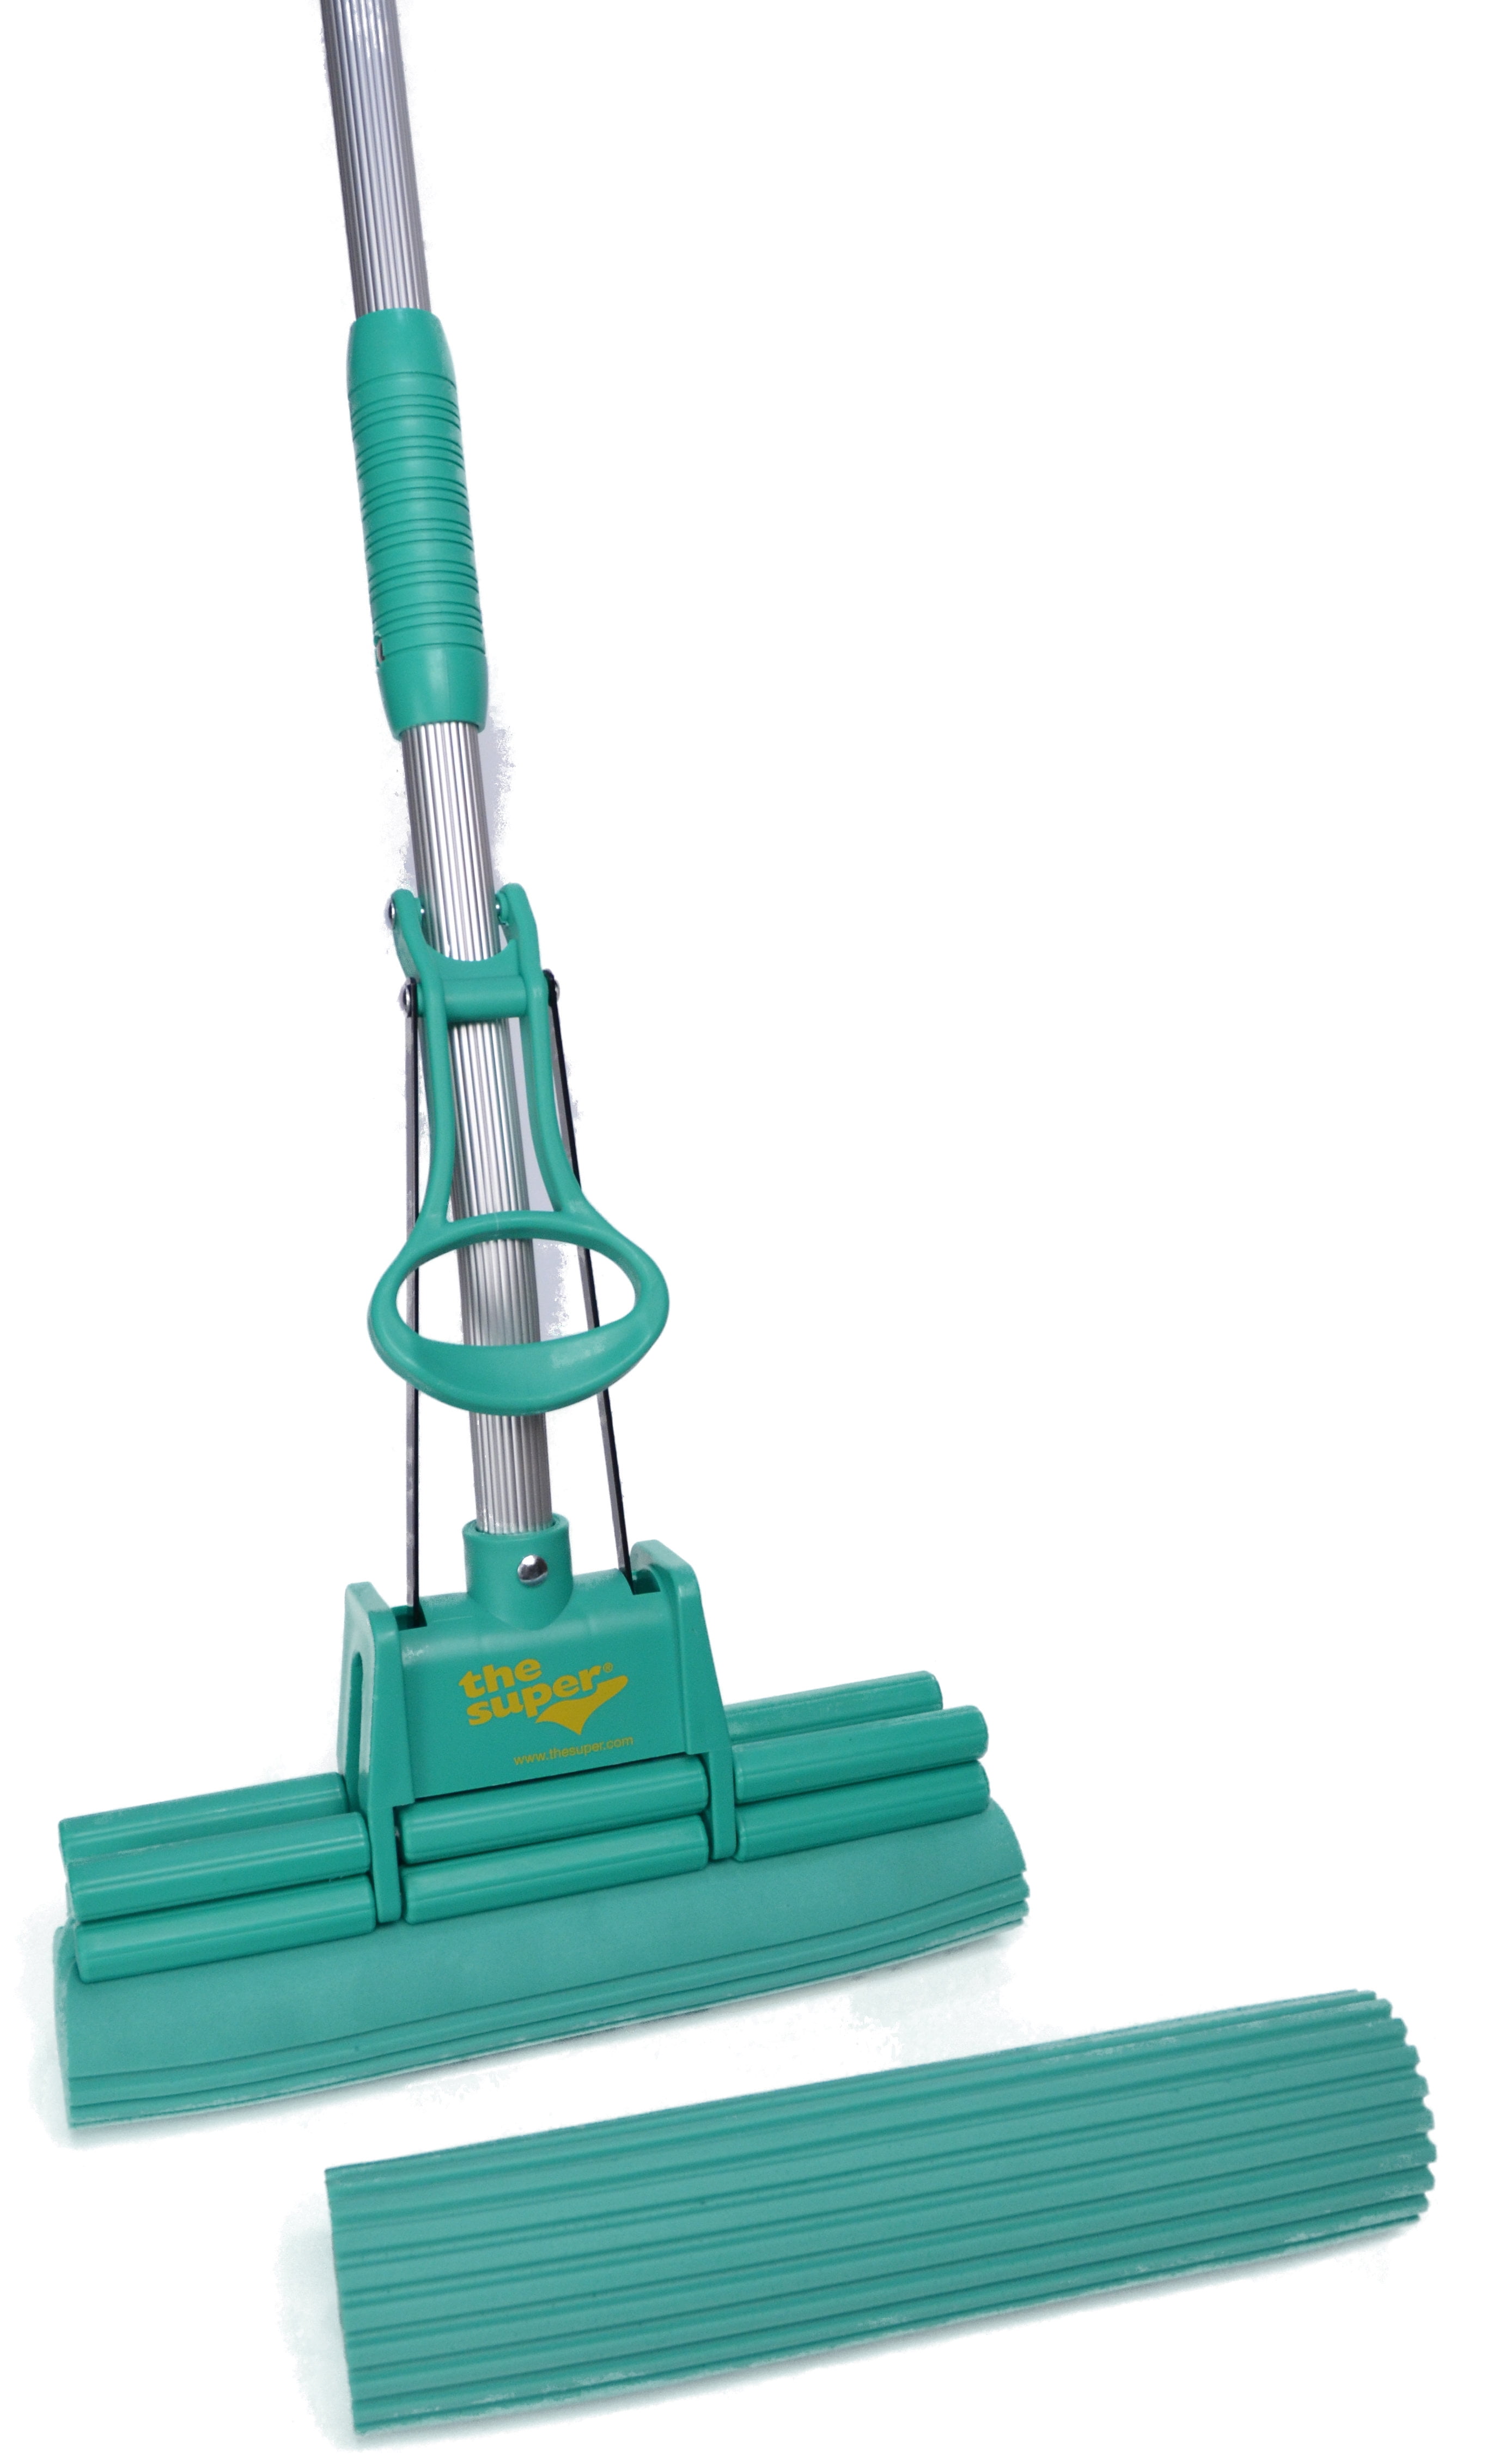 11 Double Roller Pva Sponge Mop Set, Best Sponge Mop For Laminate Floors